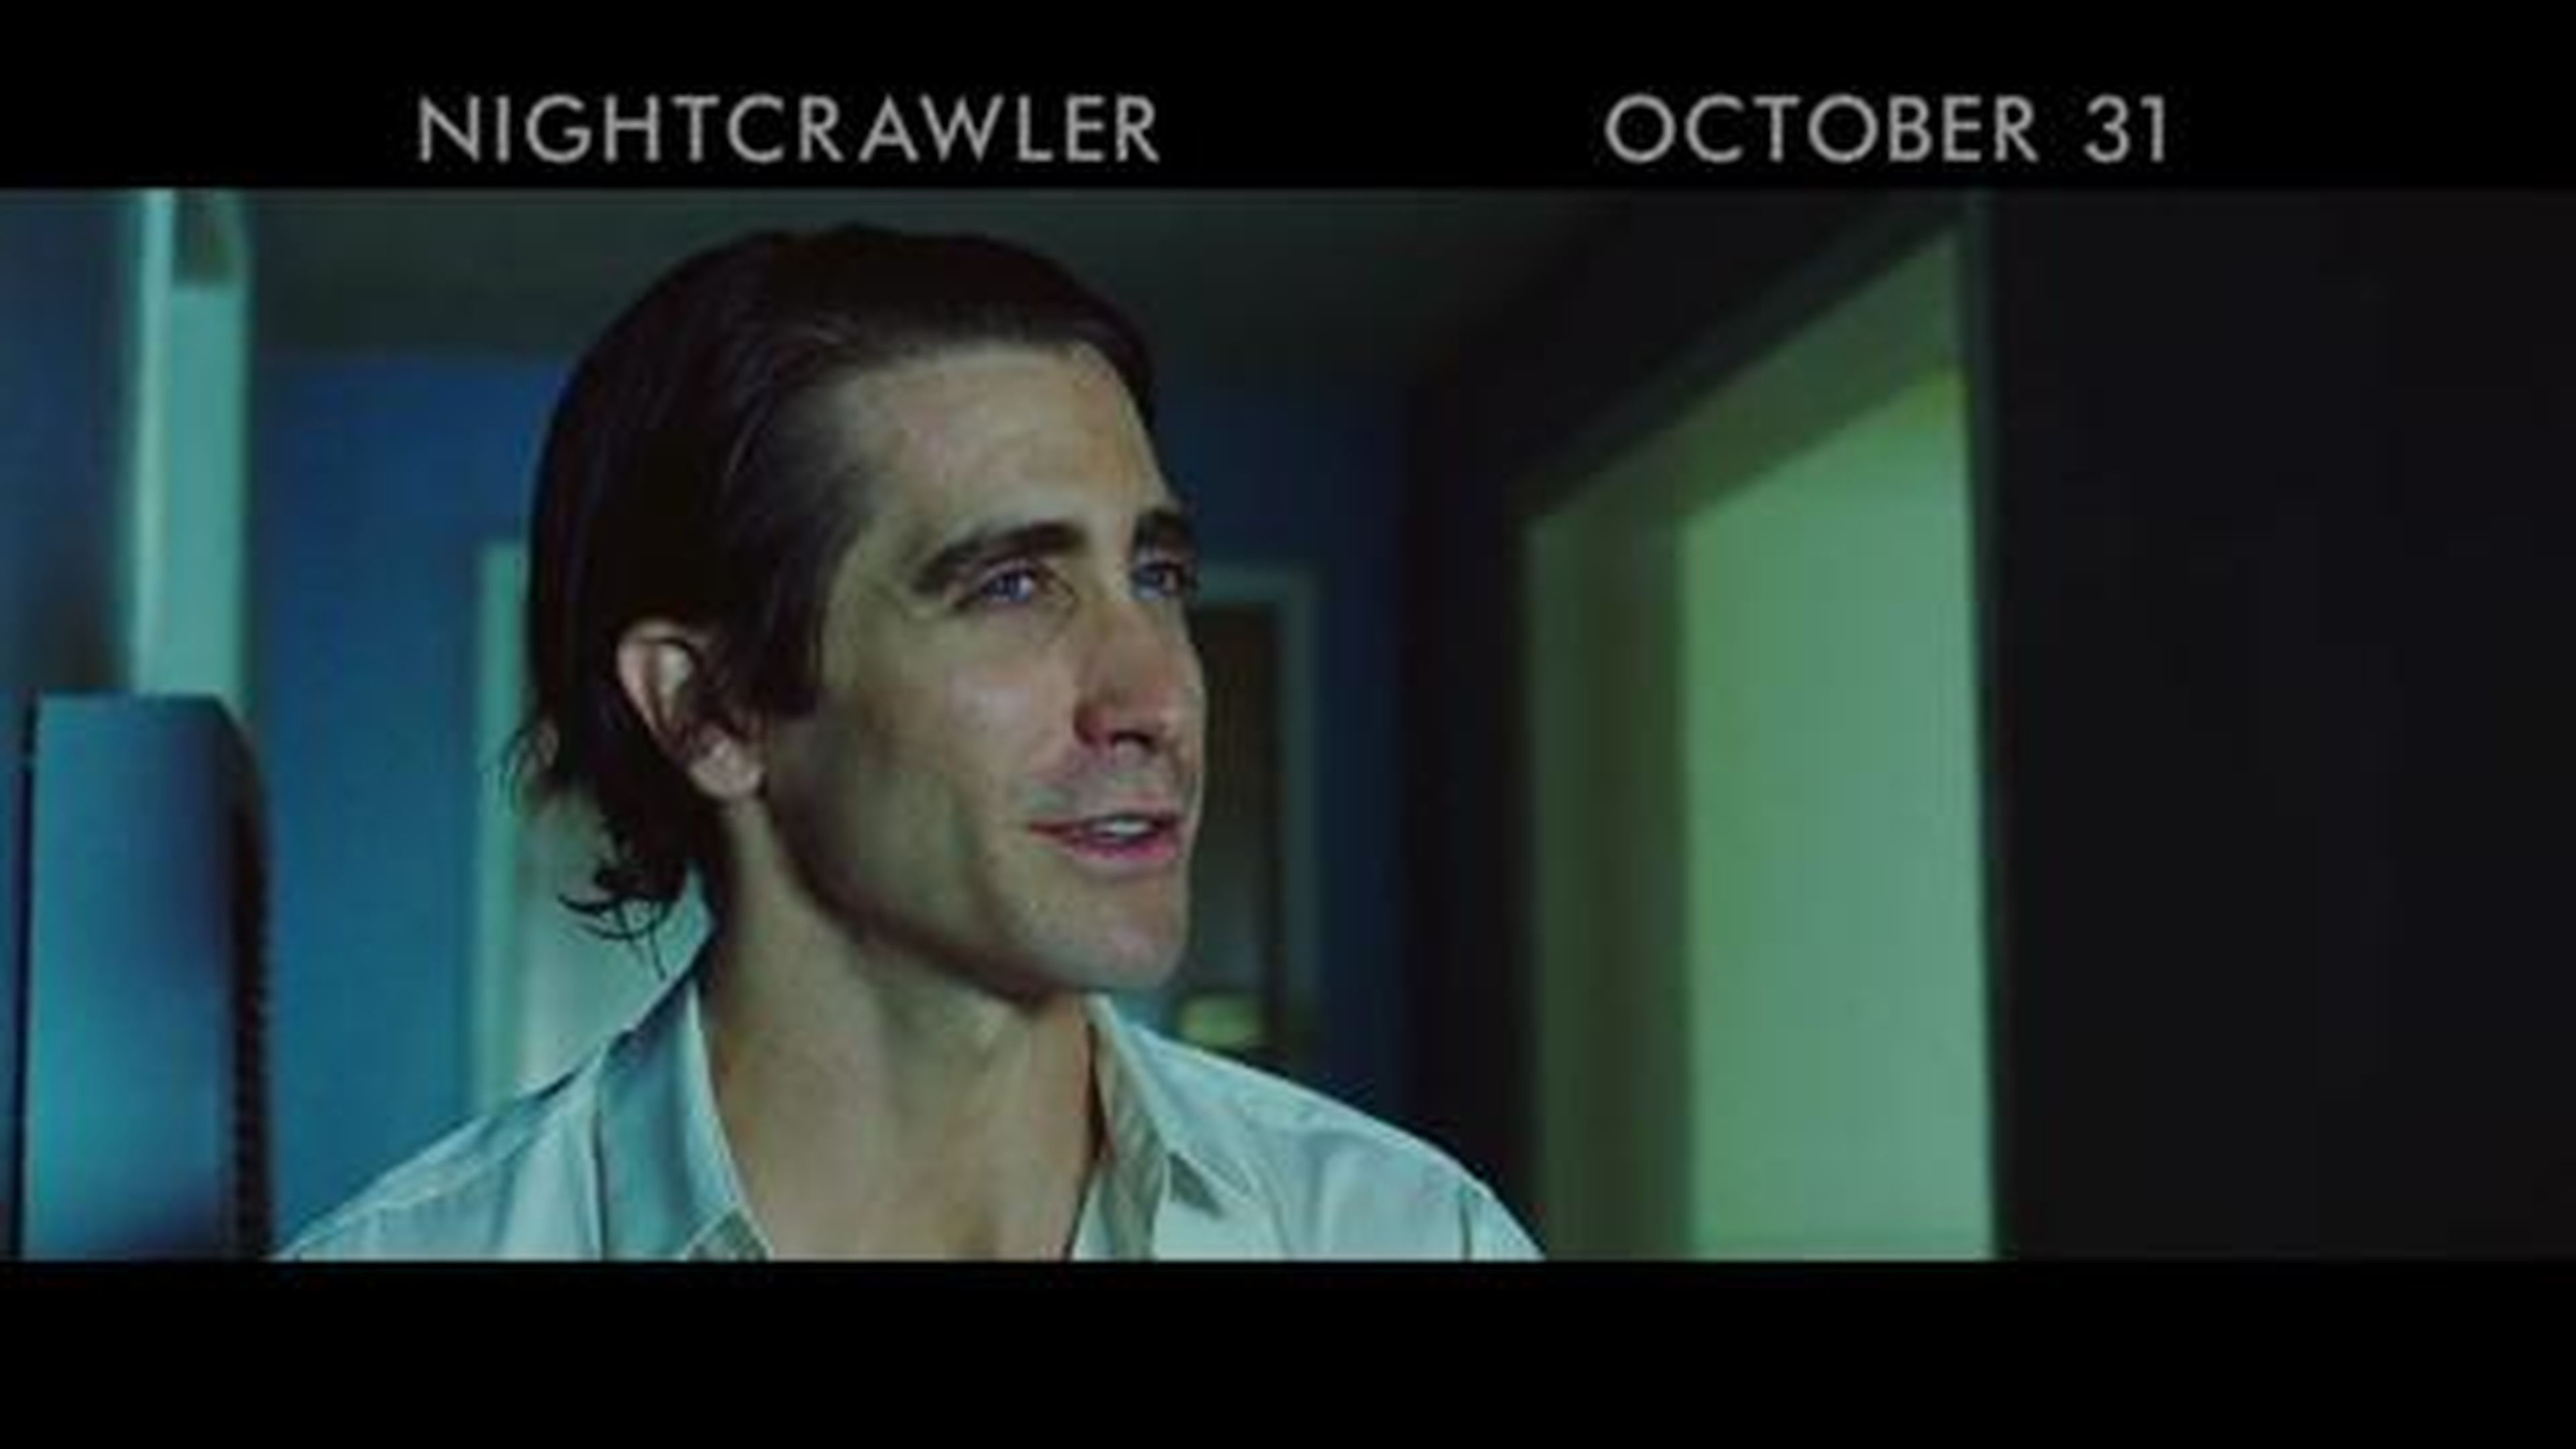 Nightcrawler TV Spot - Modern Masterpiece (2014) - Jake Gyllenhaal Crime Drama HD